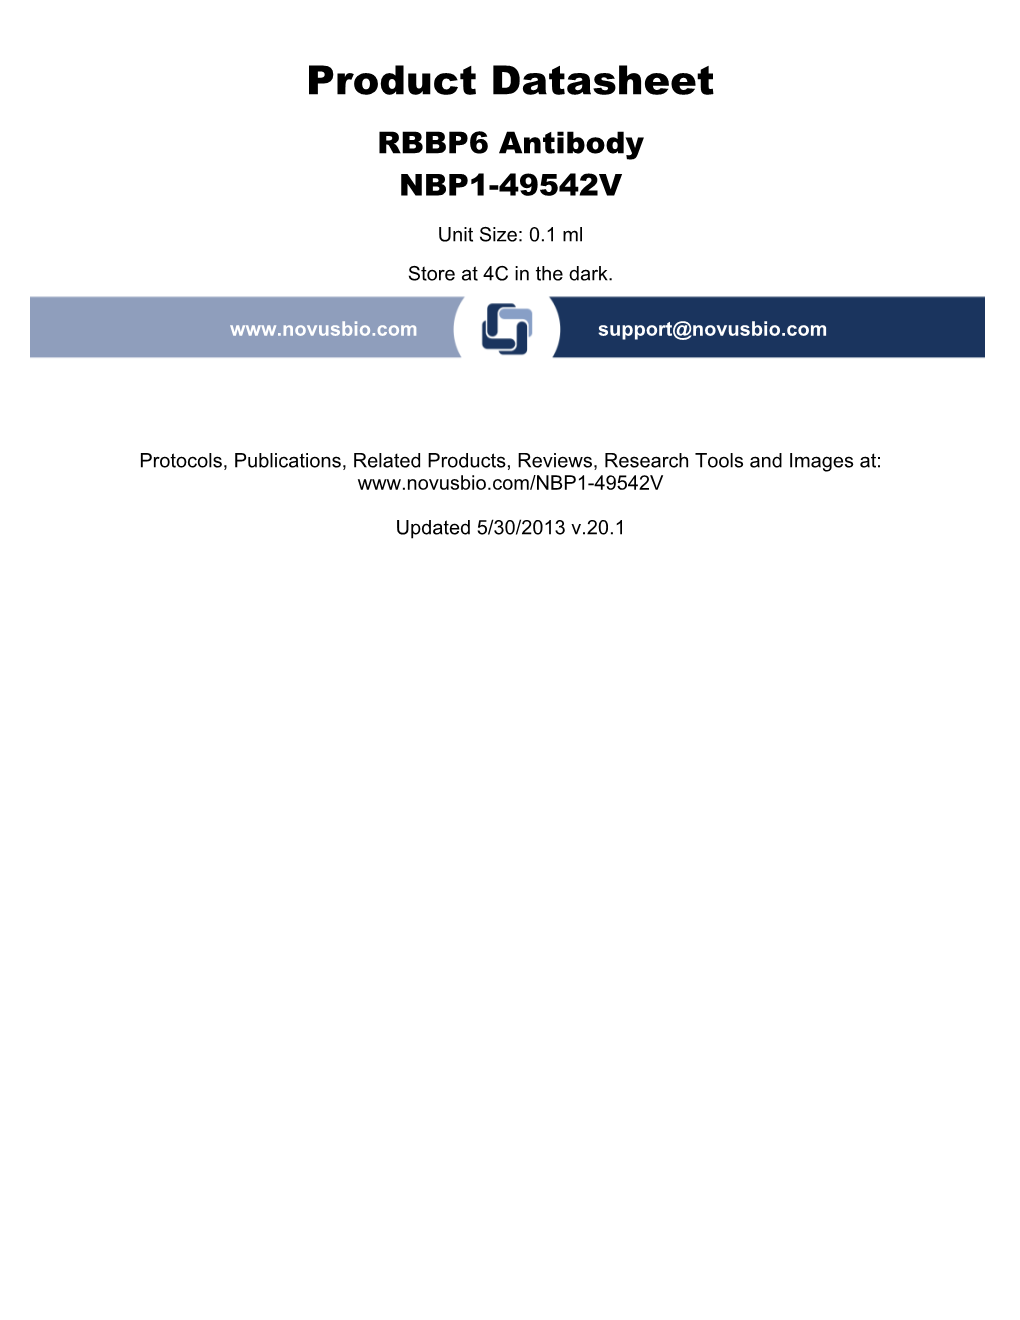 Product Datasheet RBBP6 Antibody NBP1-49542V